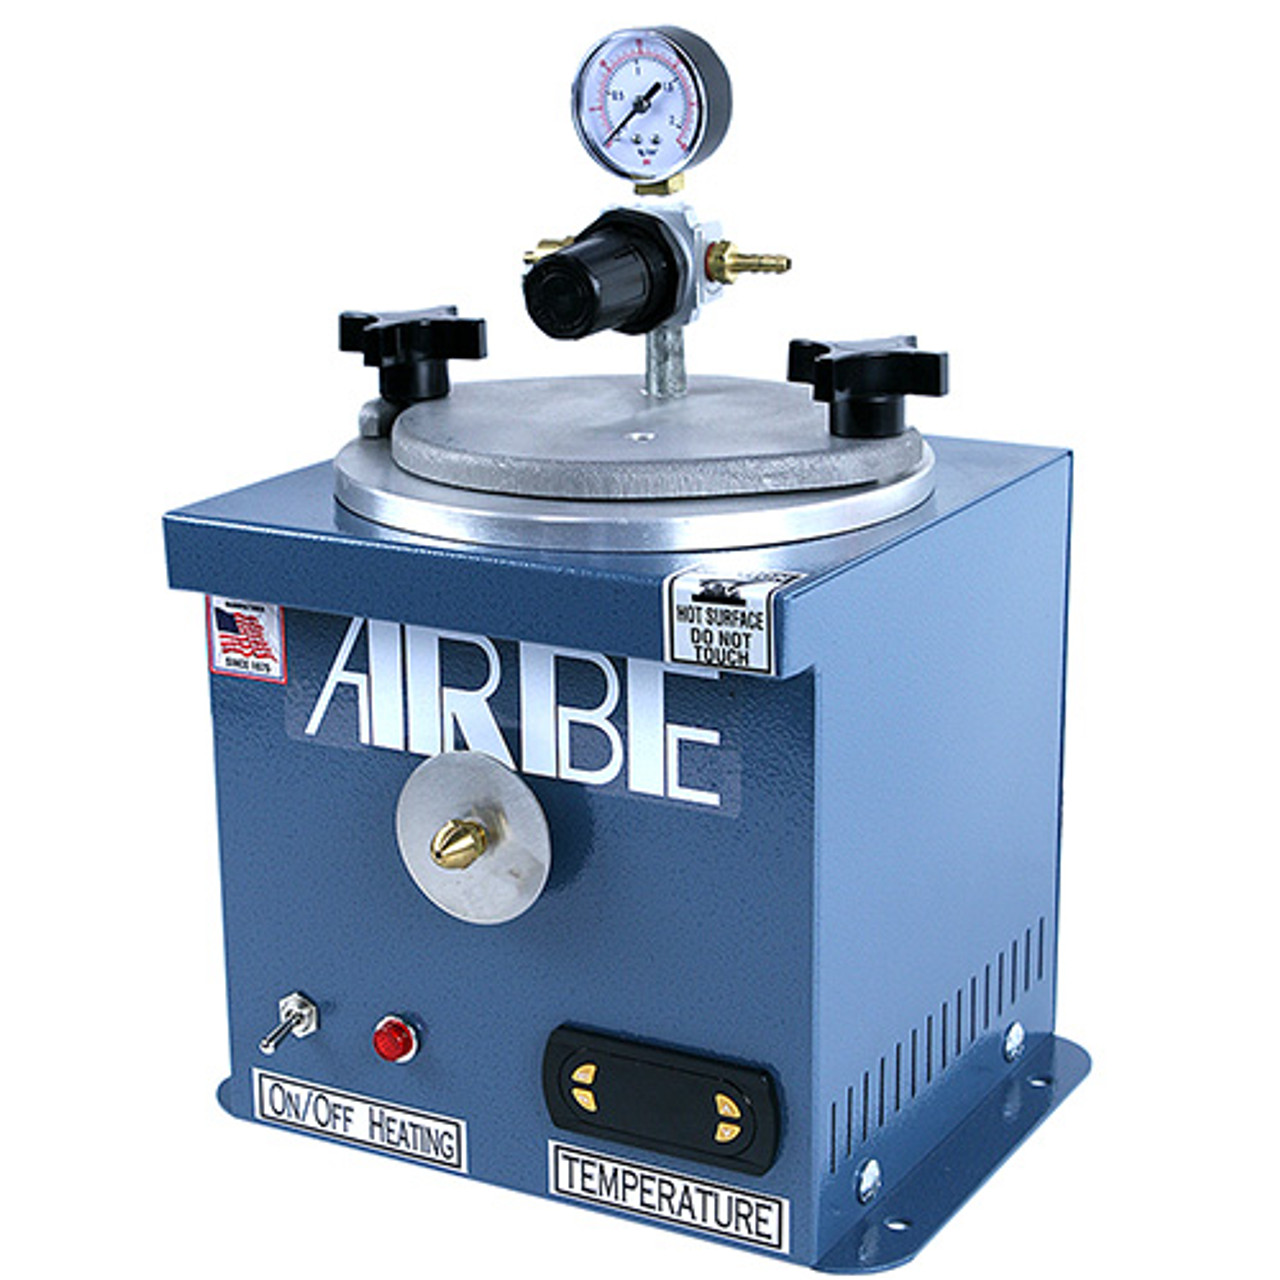 ARBE Digital Wax Injector - 1-1/3 QT - 110V